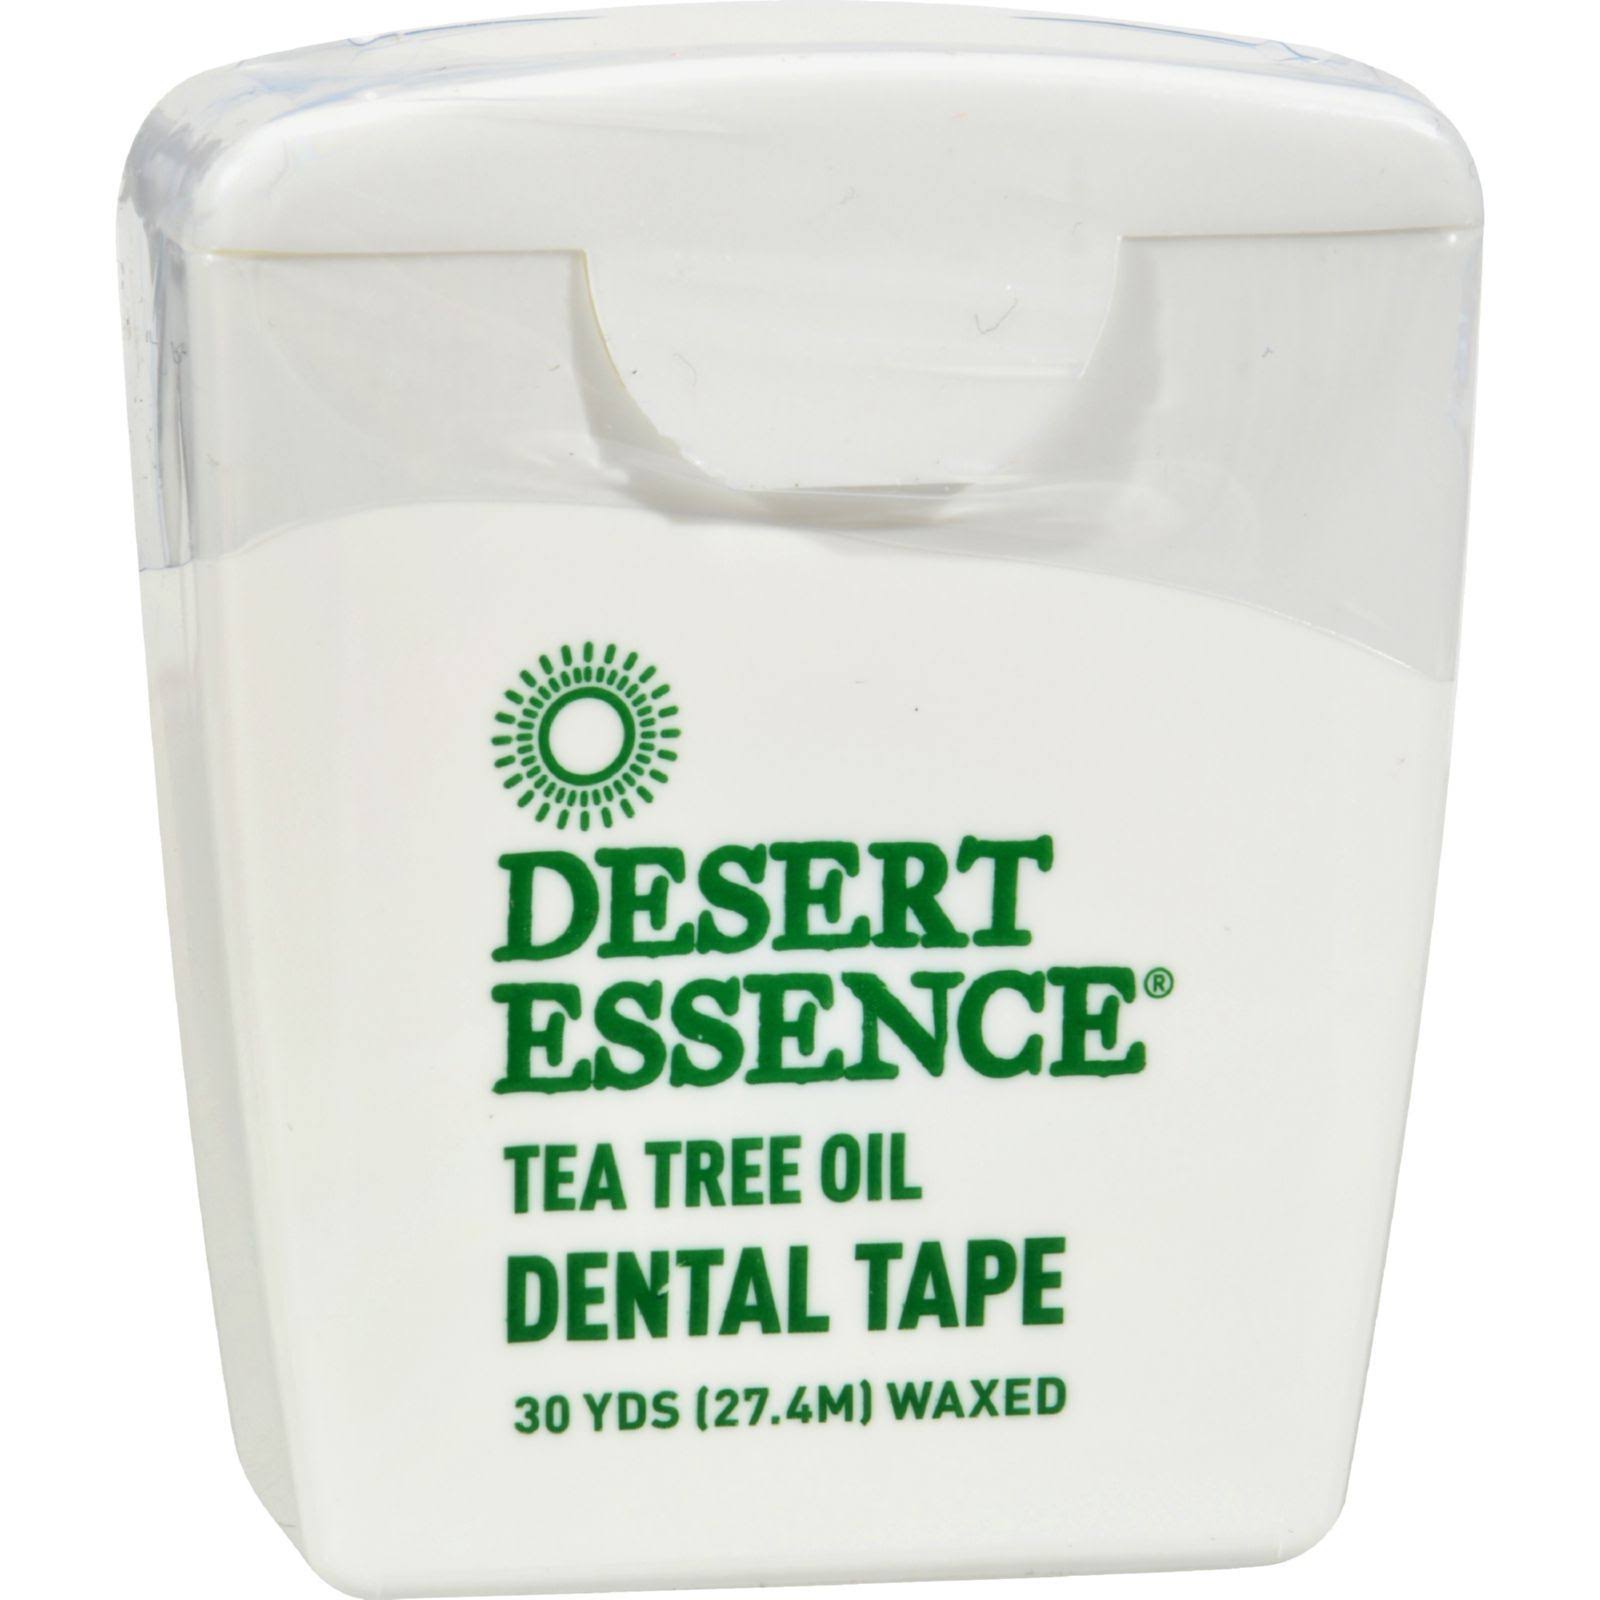 Desert Essence Dental Tape - Tea Tree Oil, 27.4m